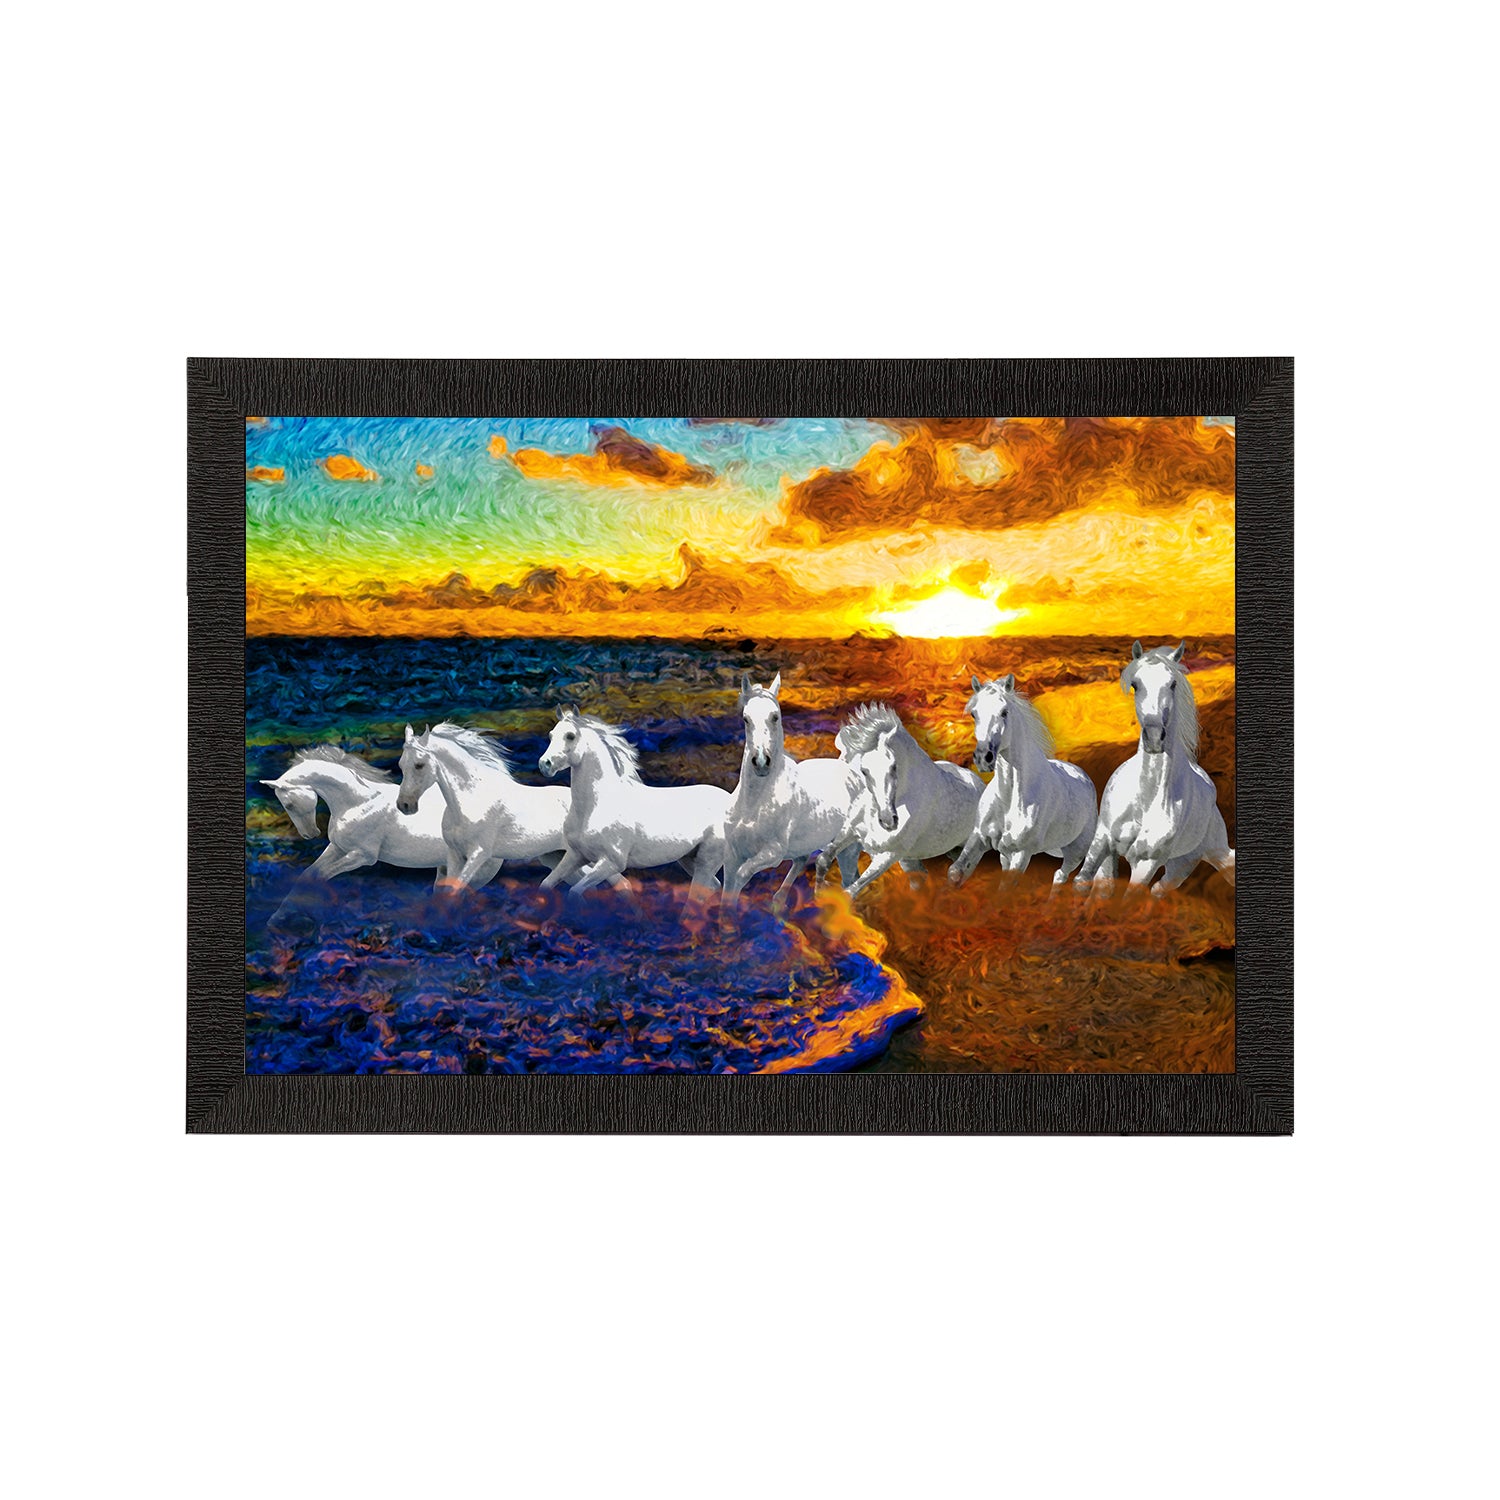 7 White Running Horses Painting Digital Printed Animal Wall Art